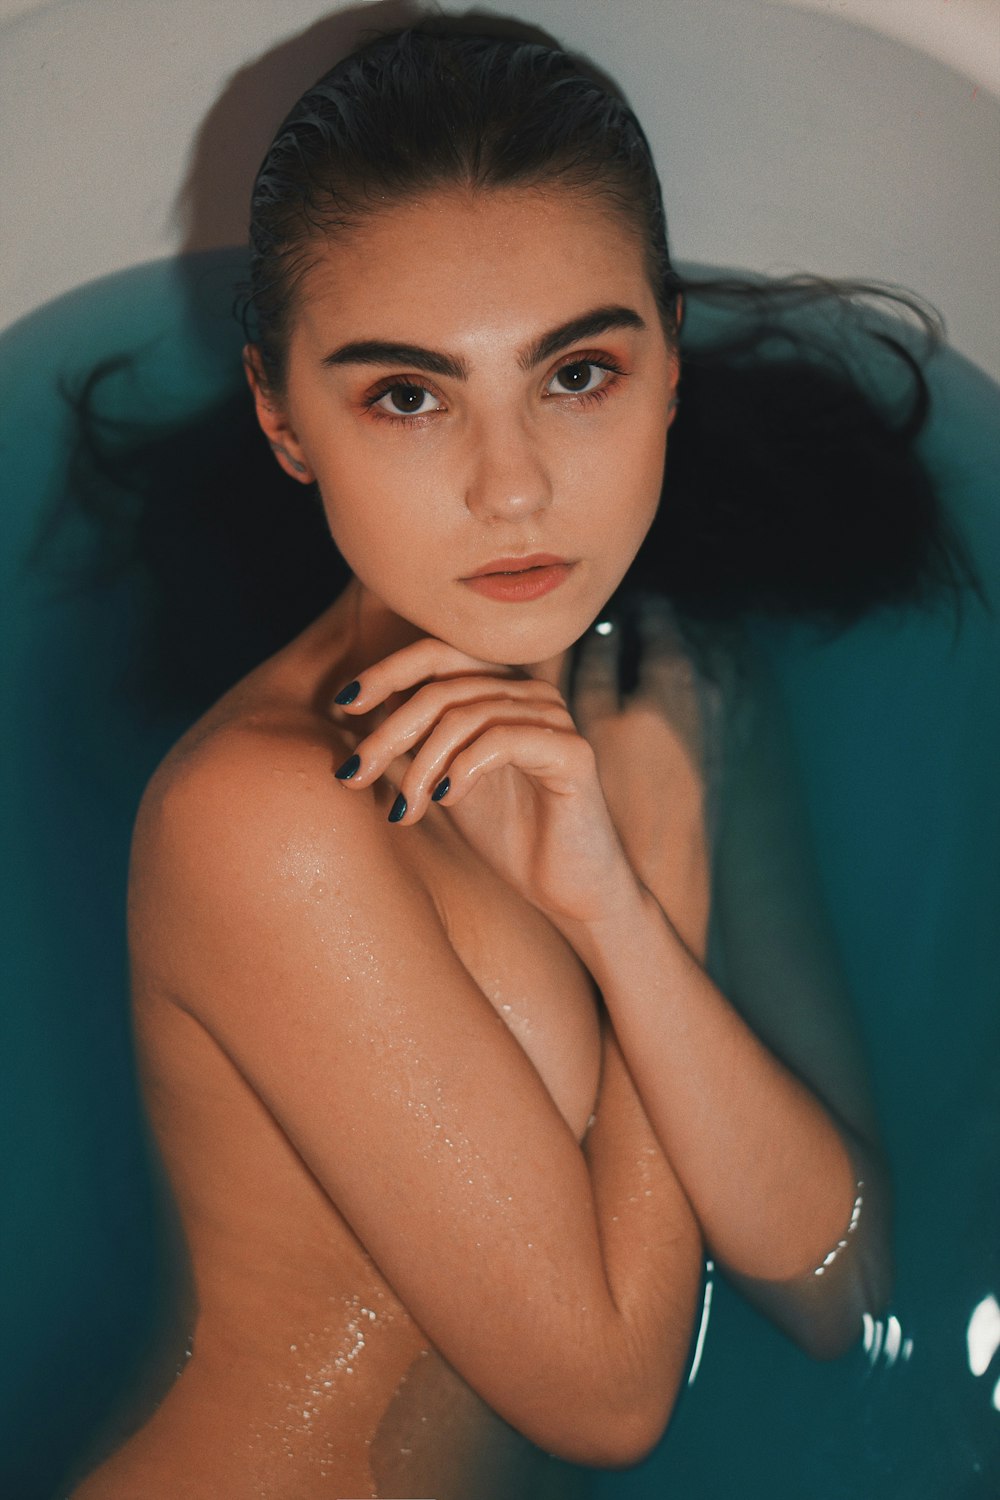 mujer semidesnuda en la bañera